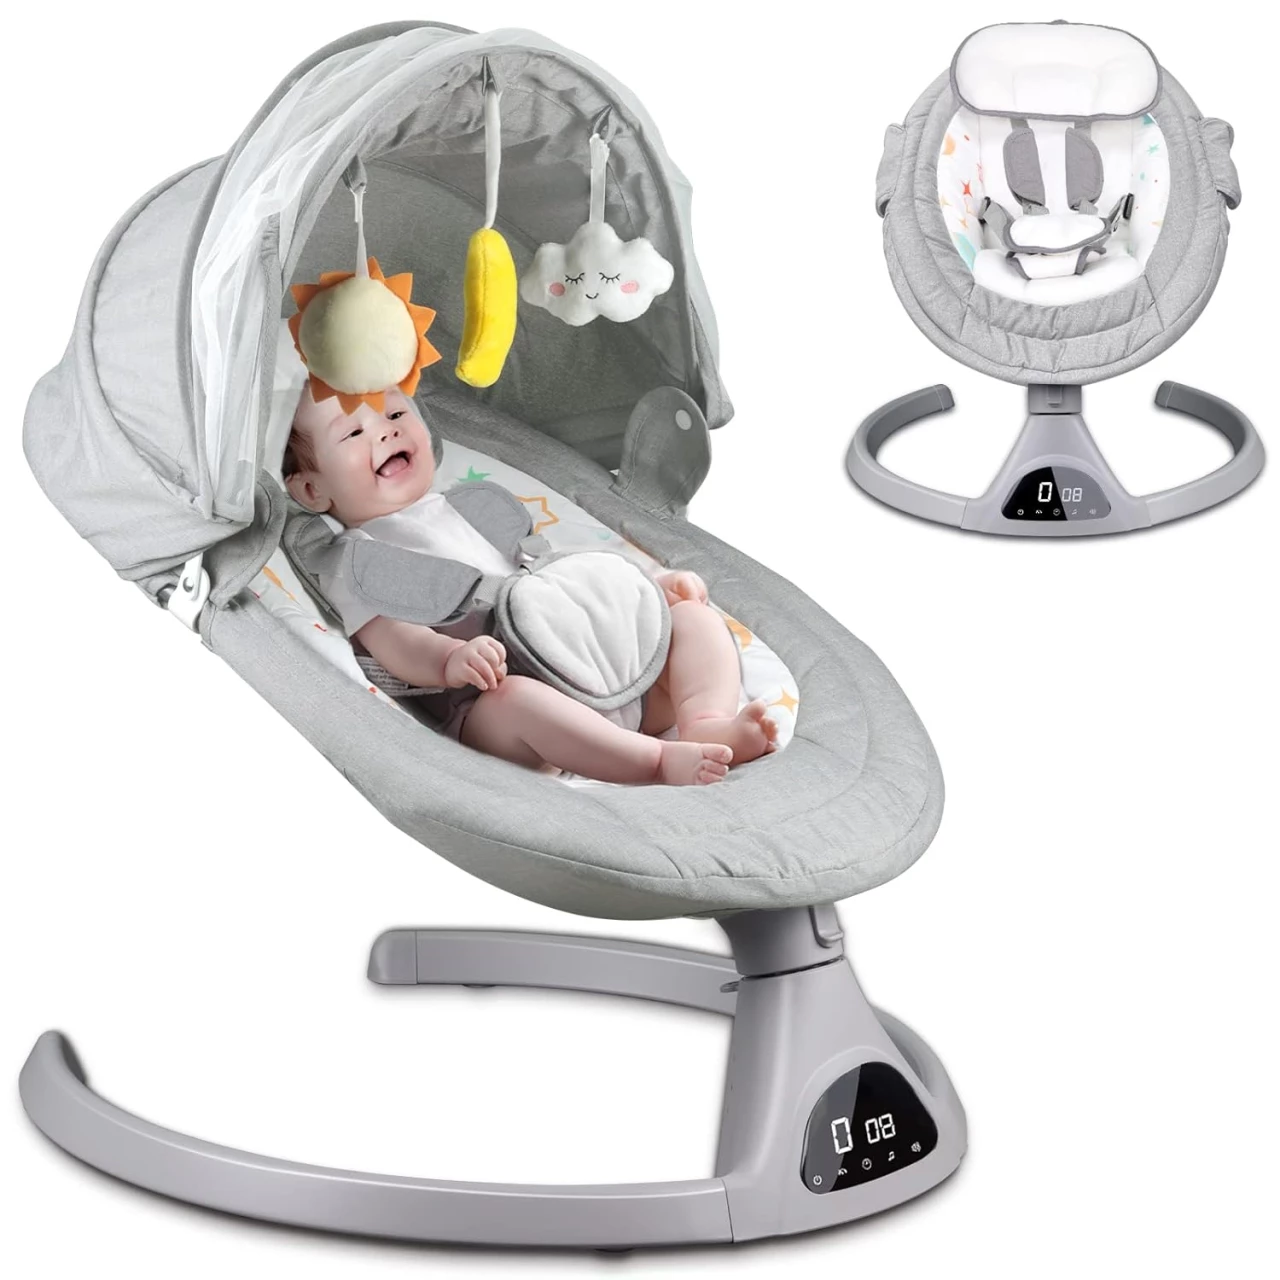 GOPANDA Baby Swings for Infants, 5 Speed Bluetooth Baby Bouncer